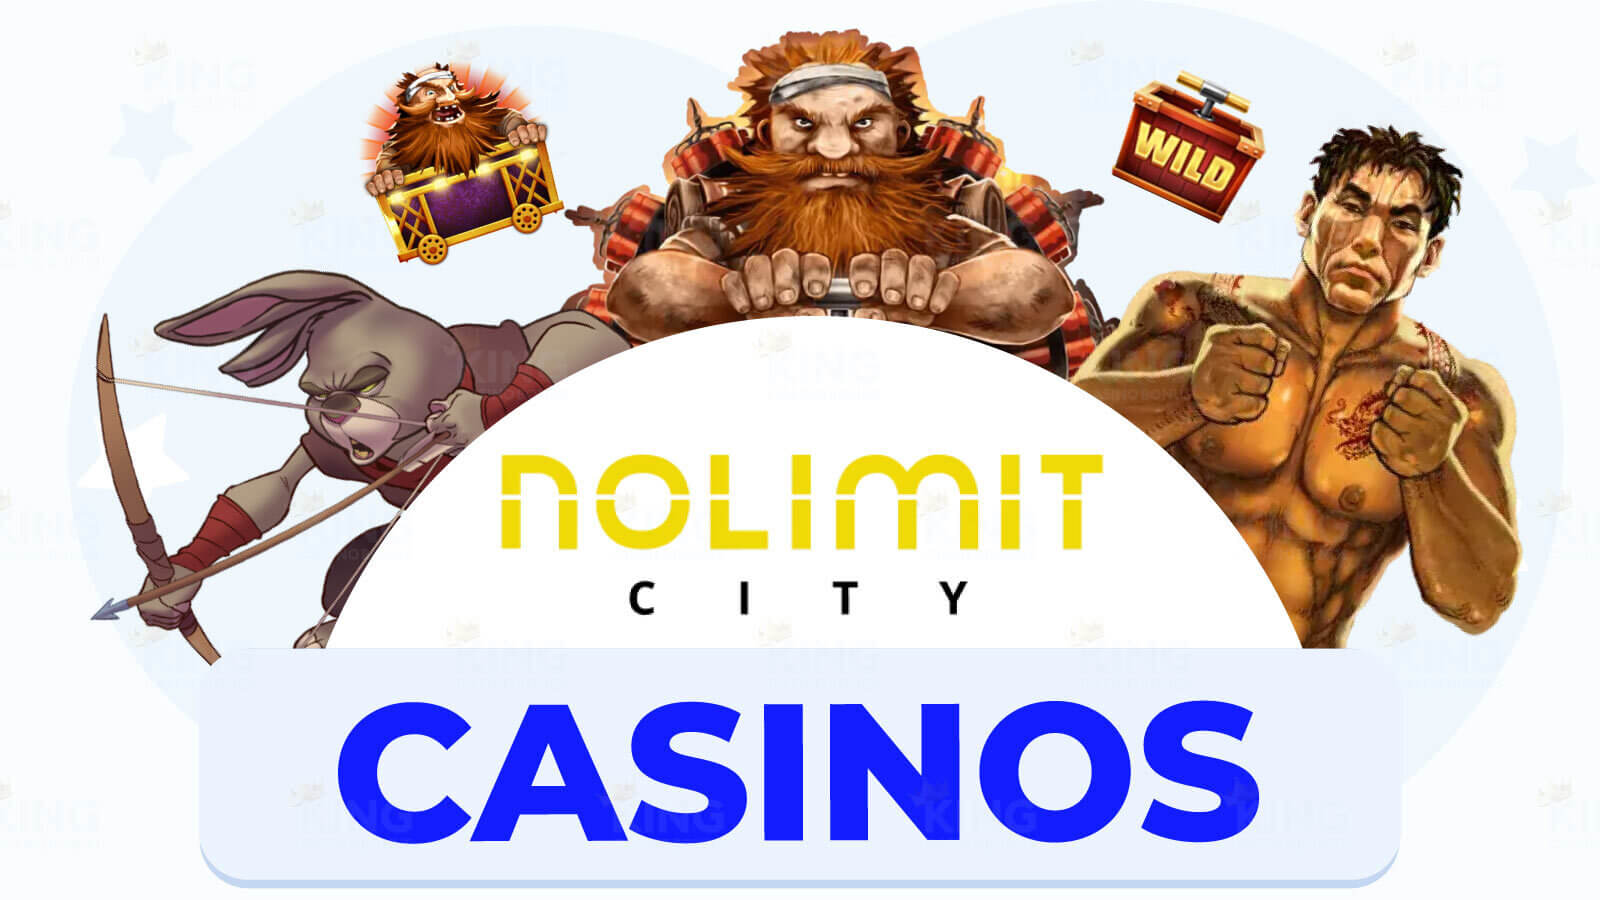 NoLimit City Casinos